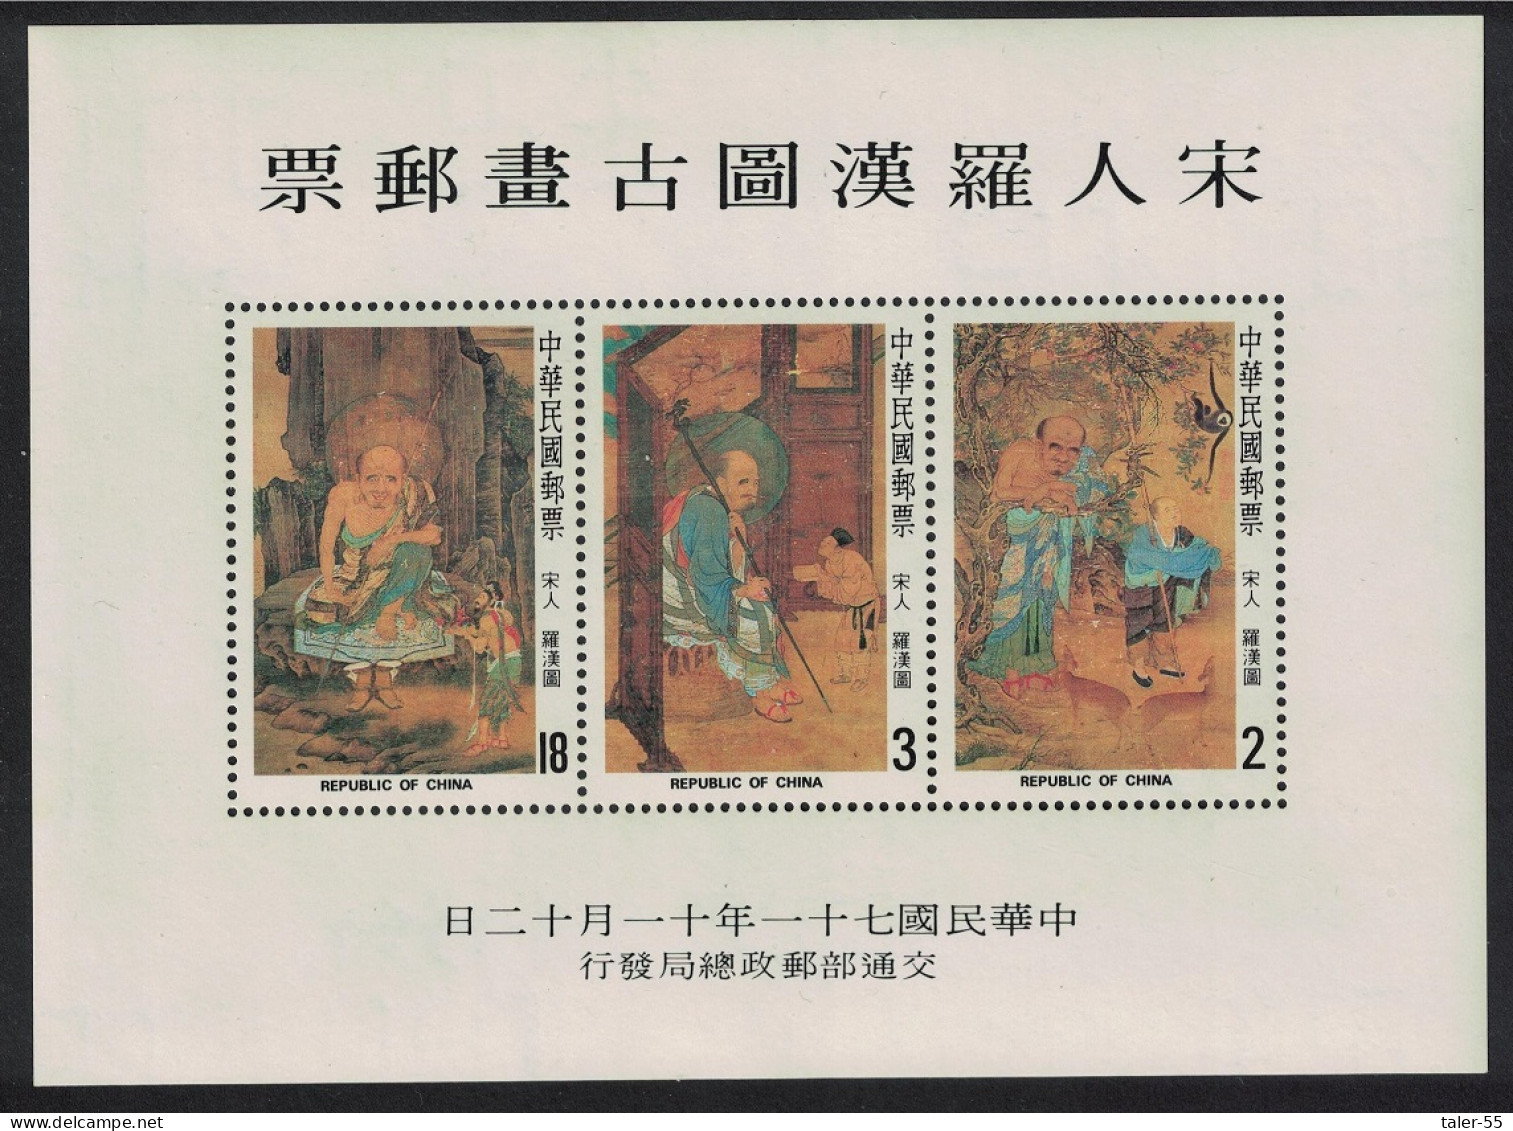 Taiwan Lohan Buddhist Saint Paintings MS 1982 MNH SG#MS1466 - Unused Stamps